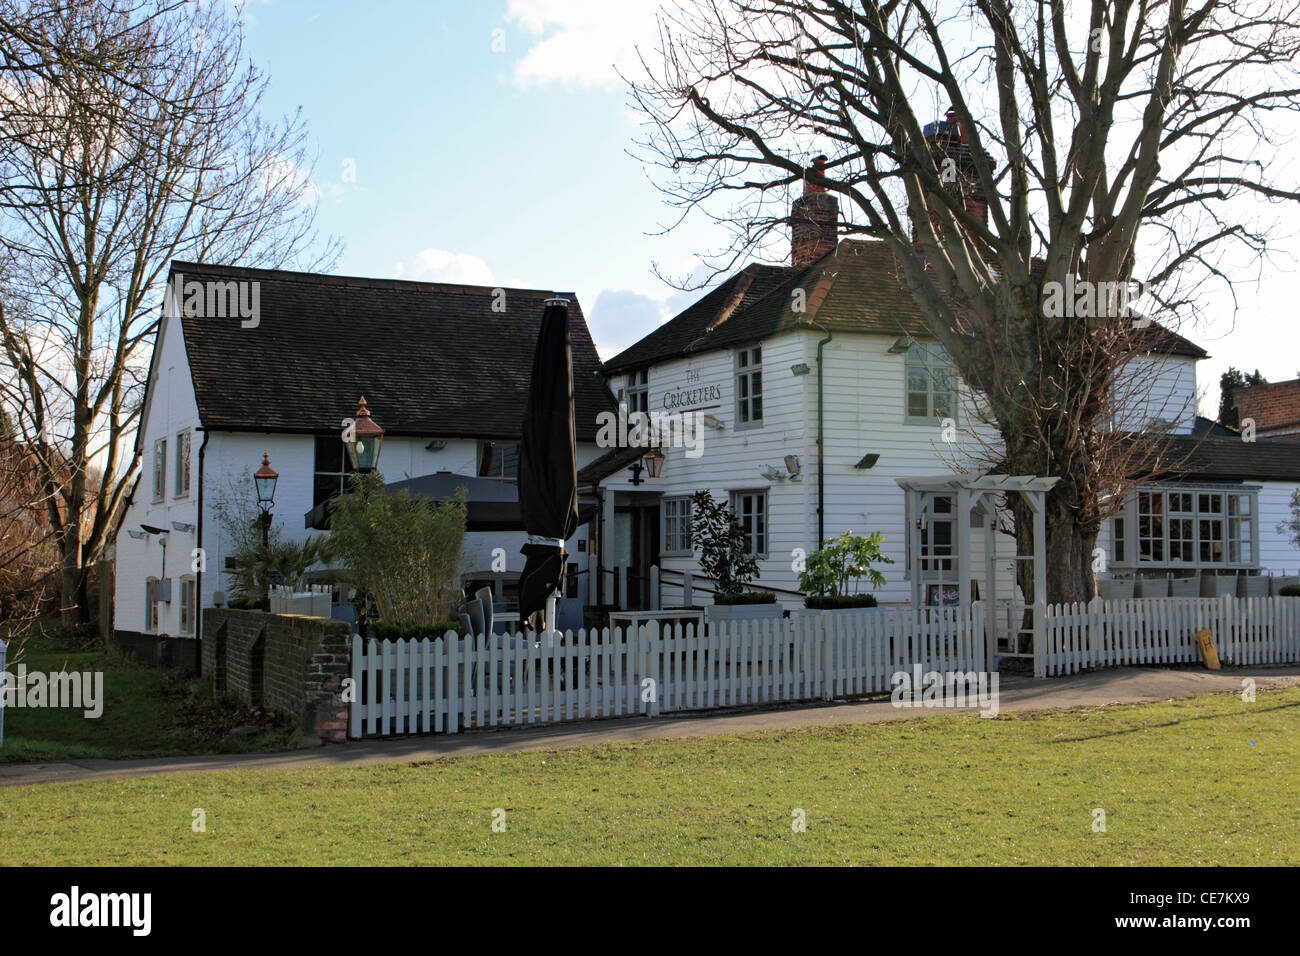 The Cricketers pub, Stamford Green Epsom Surrey England UK Stock Photo